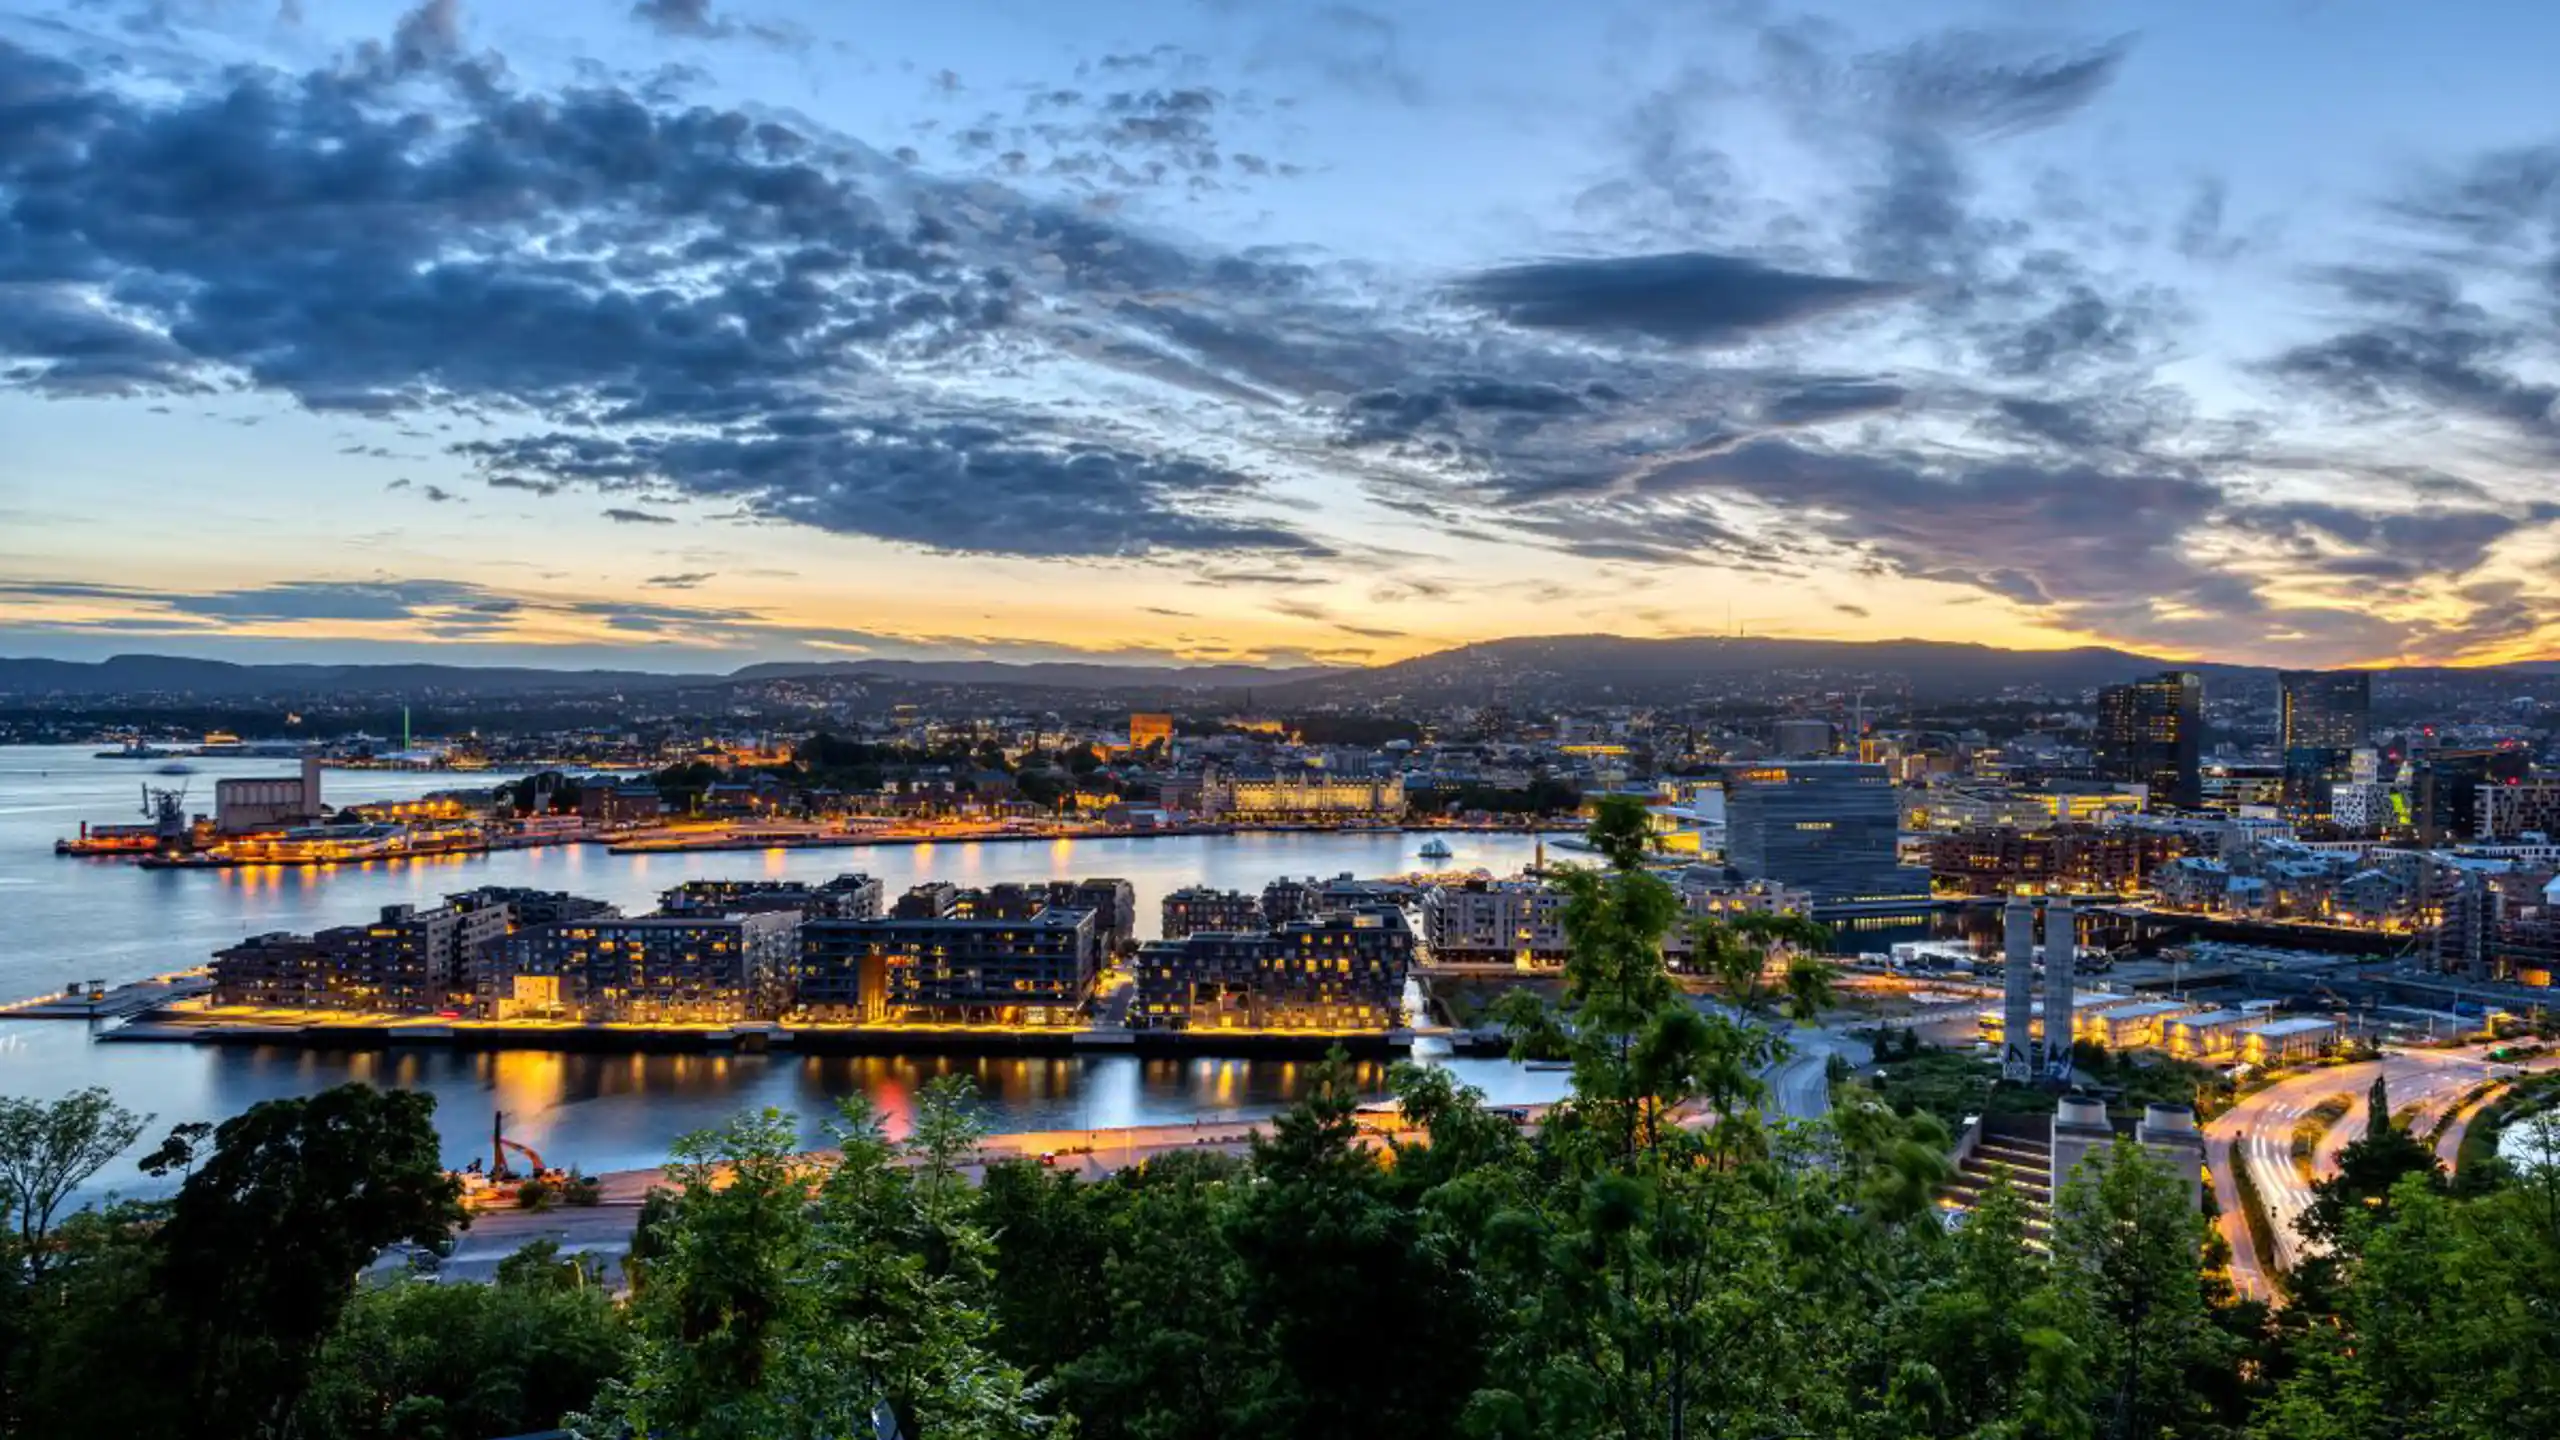 The Lights Of Oslo In Norway 2023 11 27 05 37 03 Utc